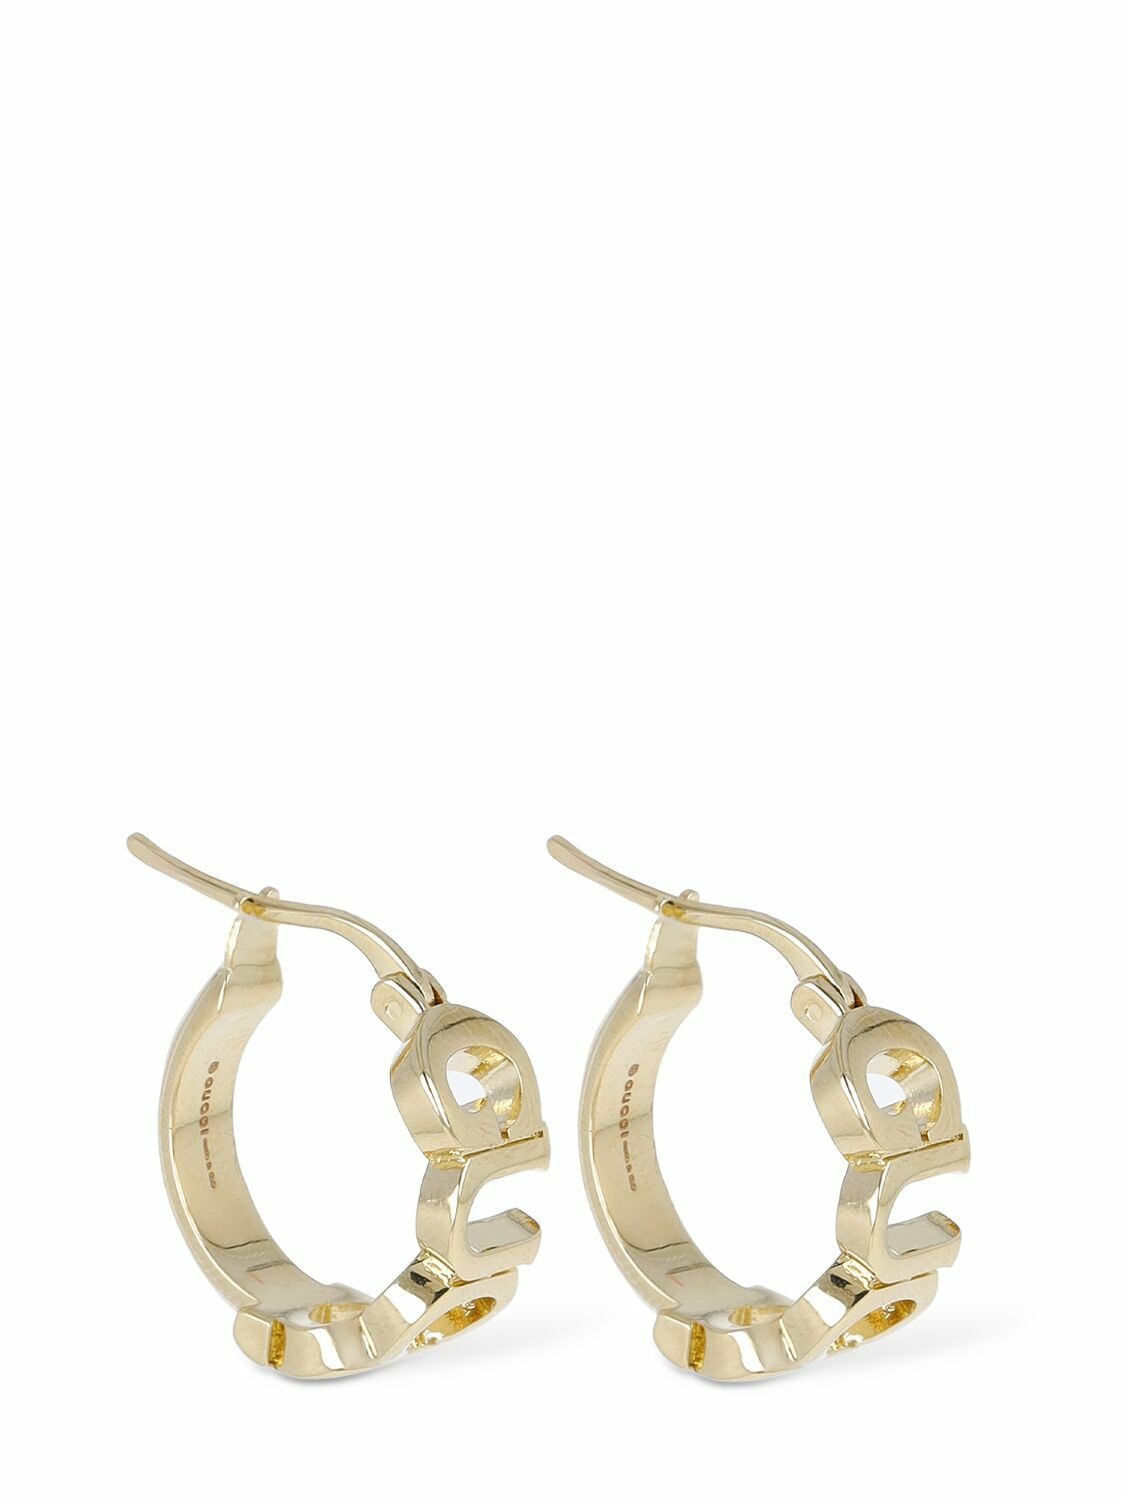 Photo: GUCCI - Gucci Lettering Brass Hoop Earrings